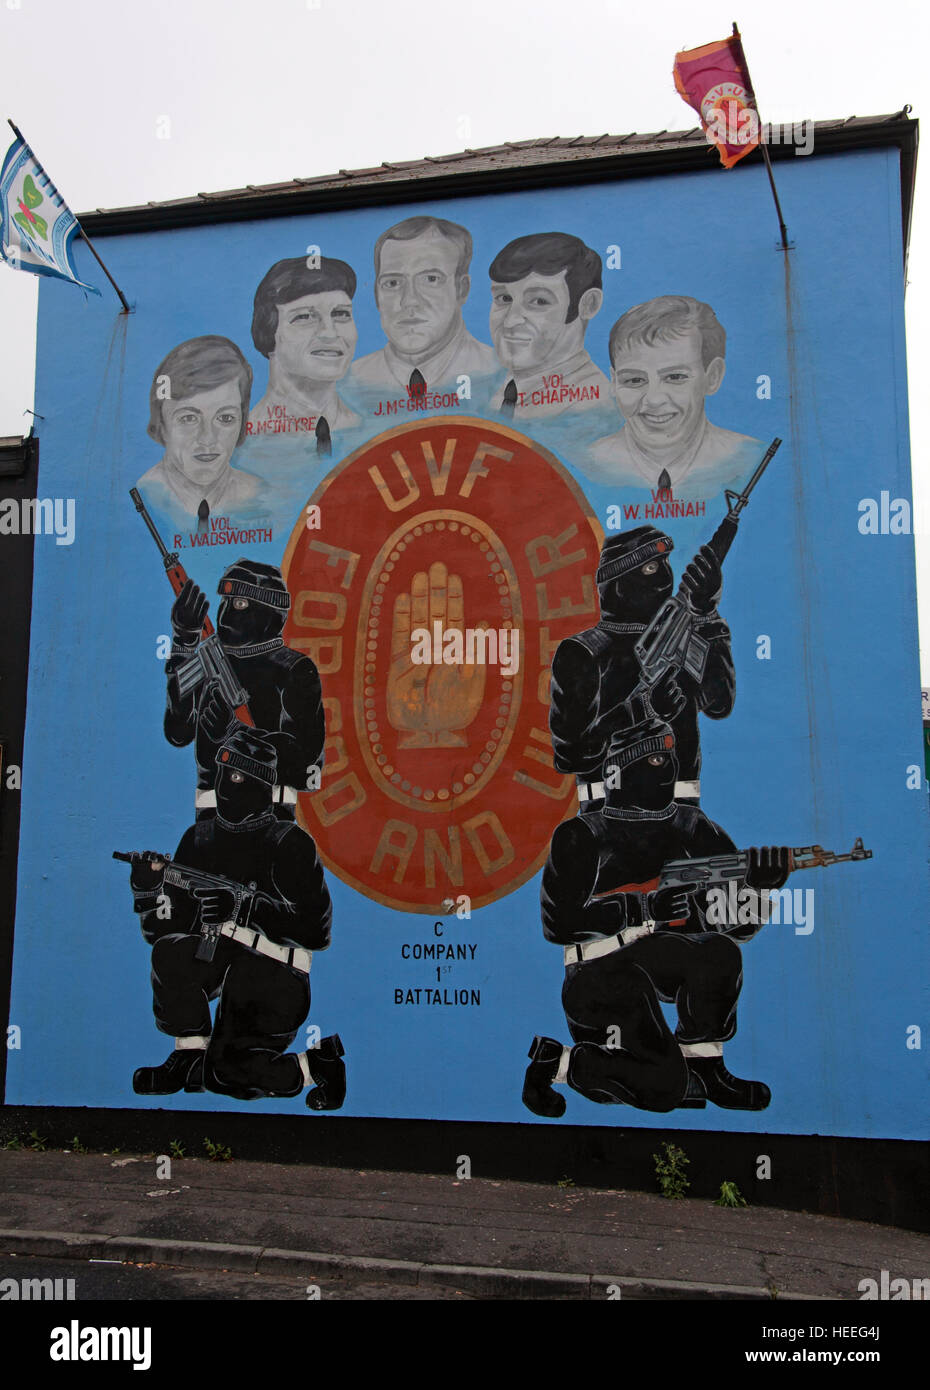 Belfast Unionist, Loyalist UVF Mural C-Company,1st Battalion Wadsworth,McIntyre,McGregor,Chapman,Hannah Stock Photo